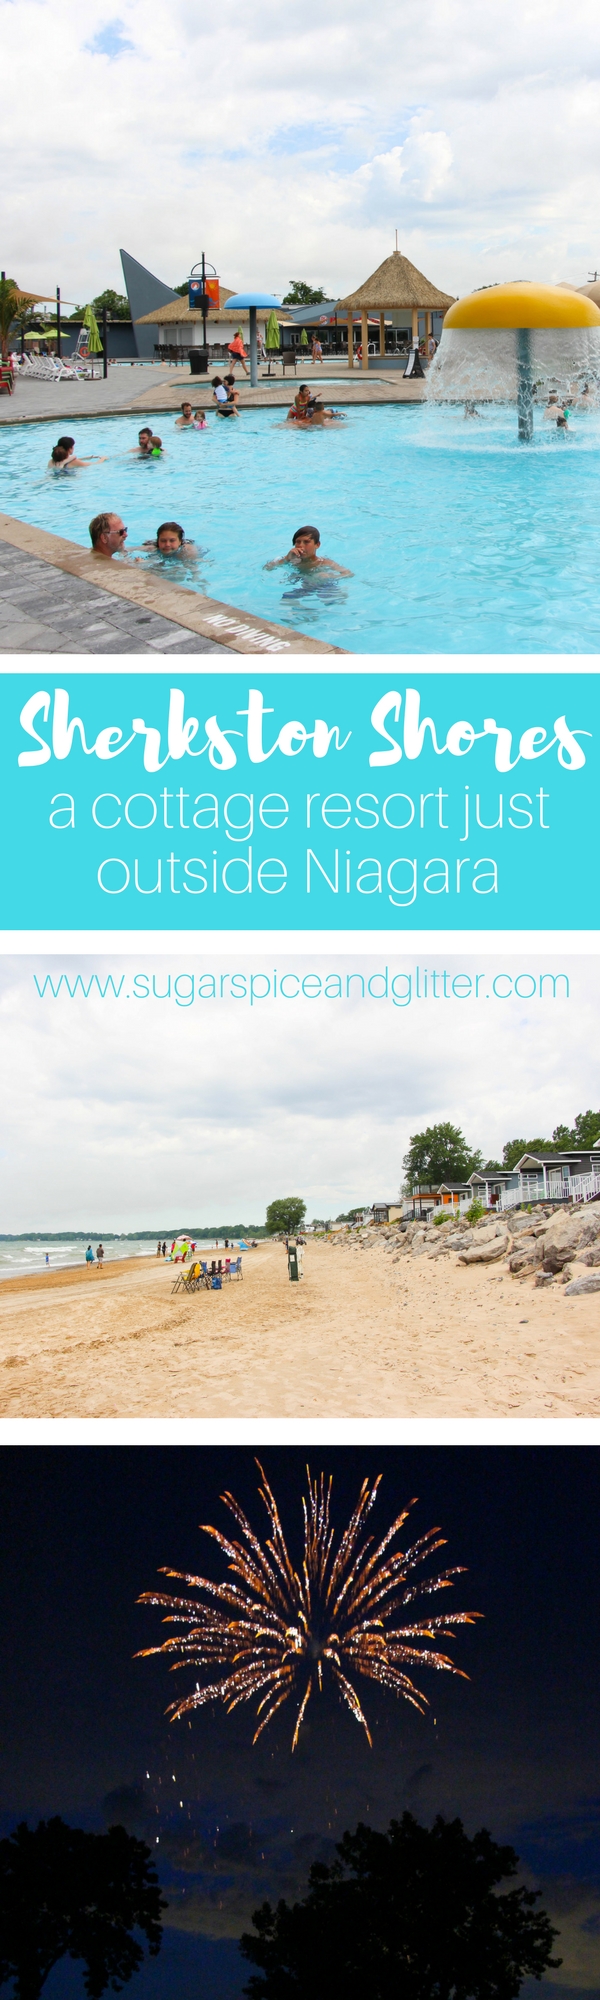 Sherkston Shores: A Cottage Resort Just Outside Niagara Falls